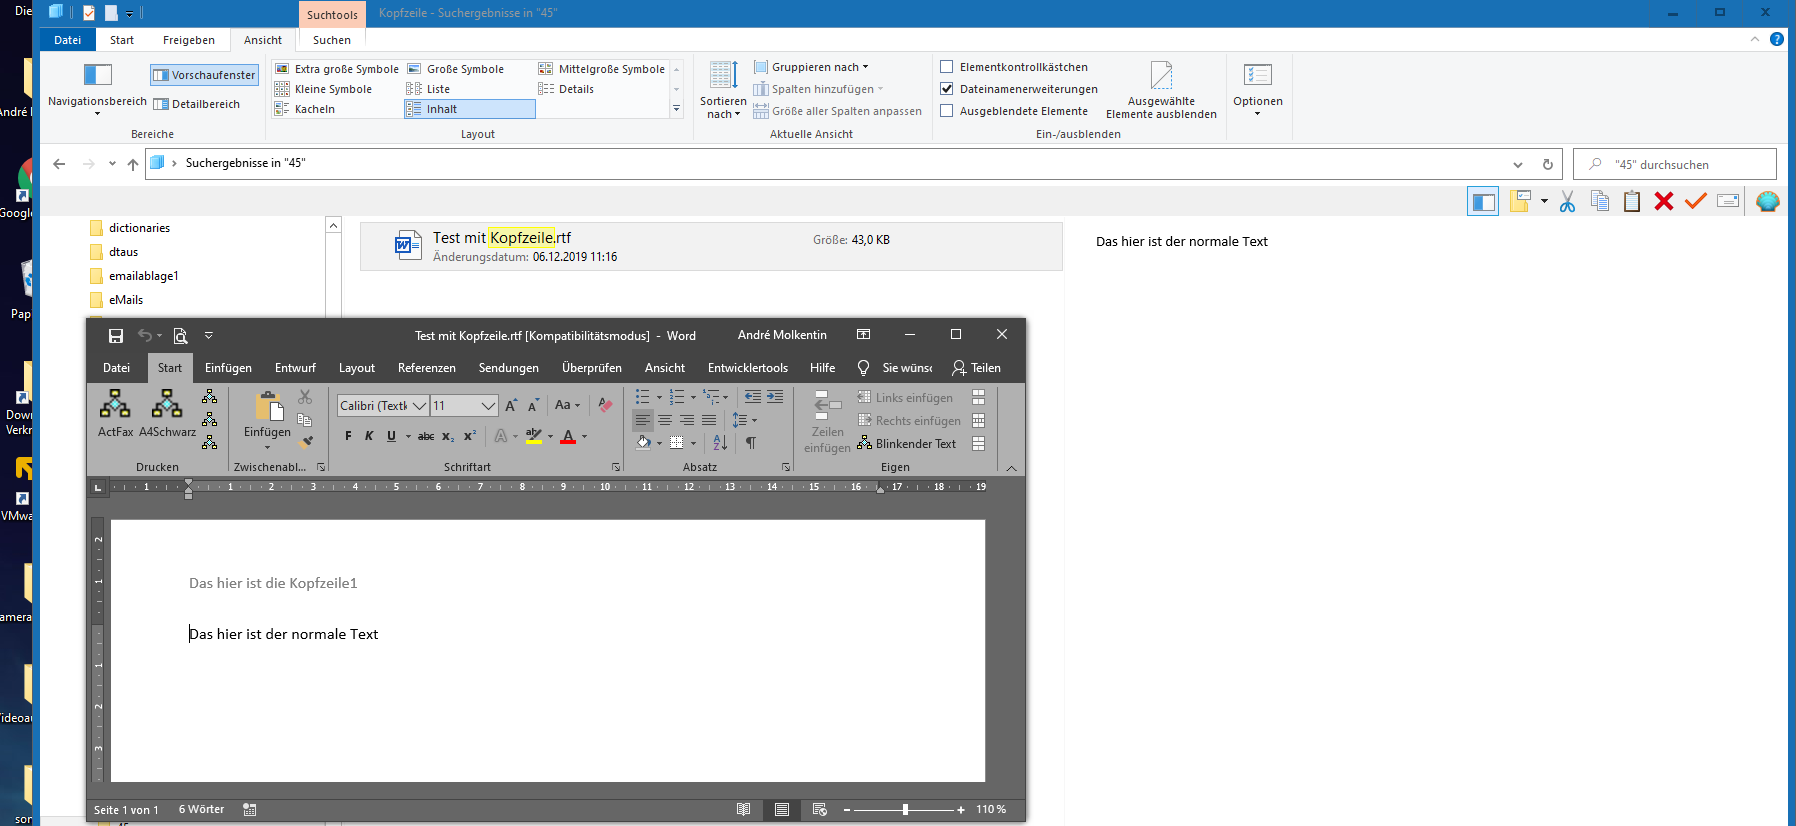 Windows Explorer file preview right c7f533c4-8a6a-4645-ac80-d2d8050bdf84?upload=true.png